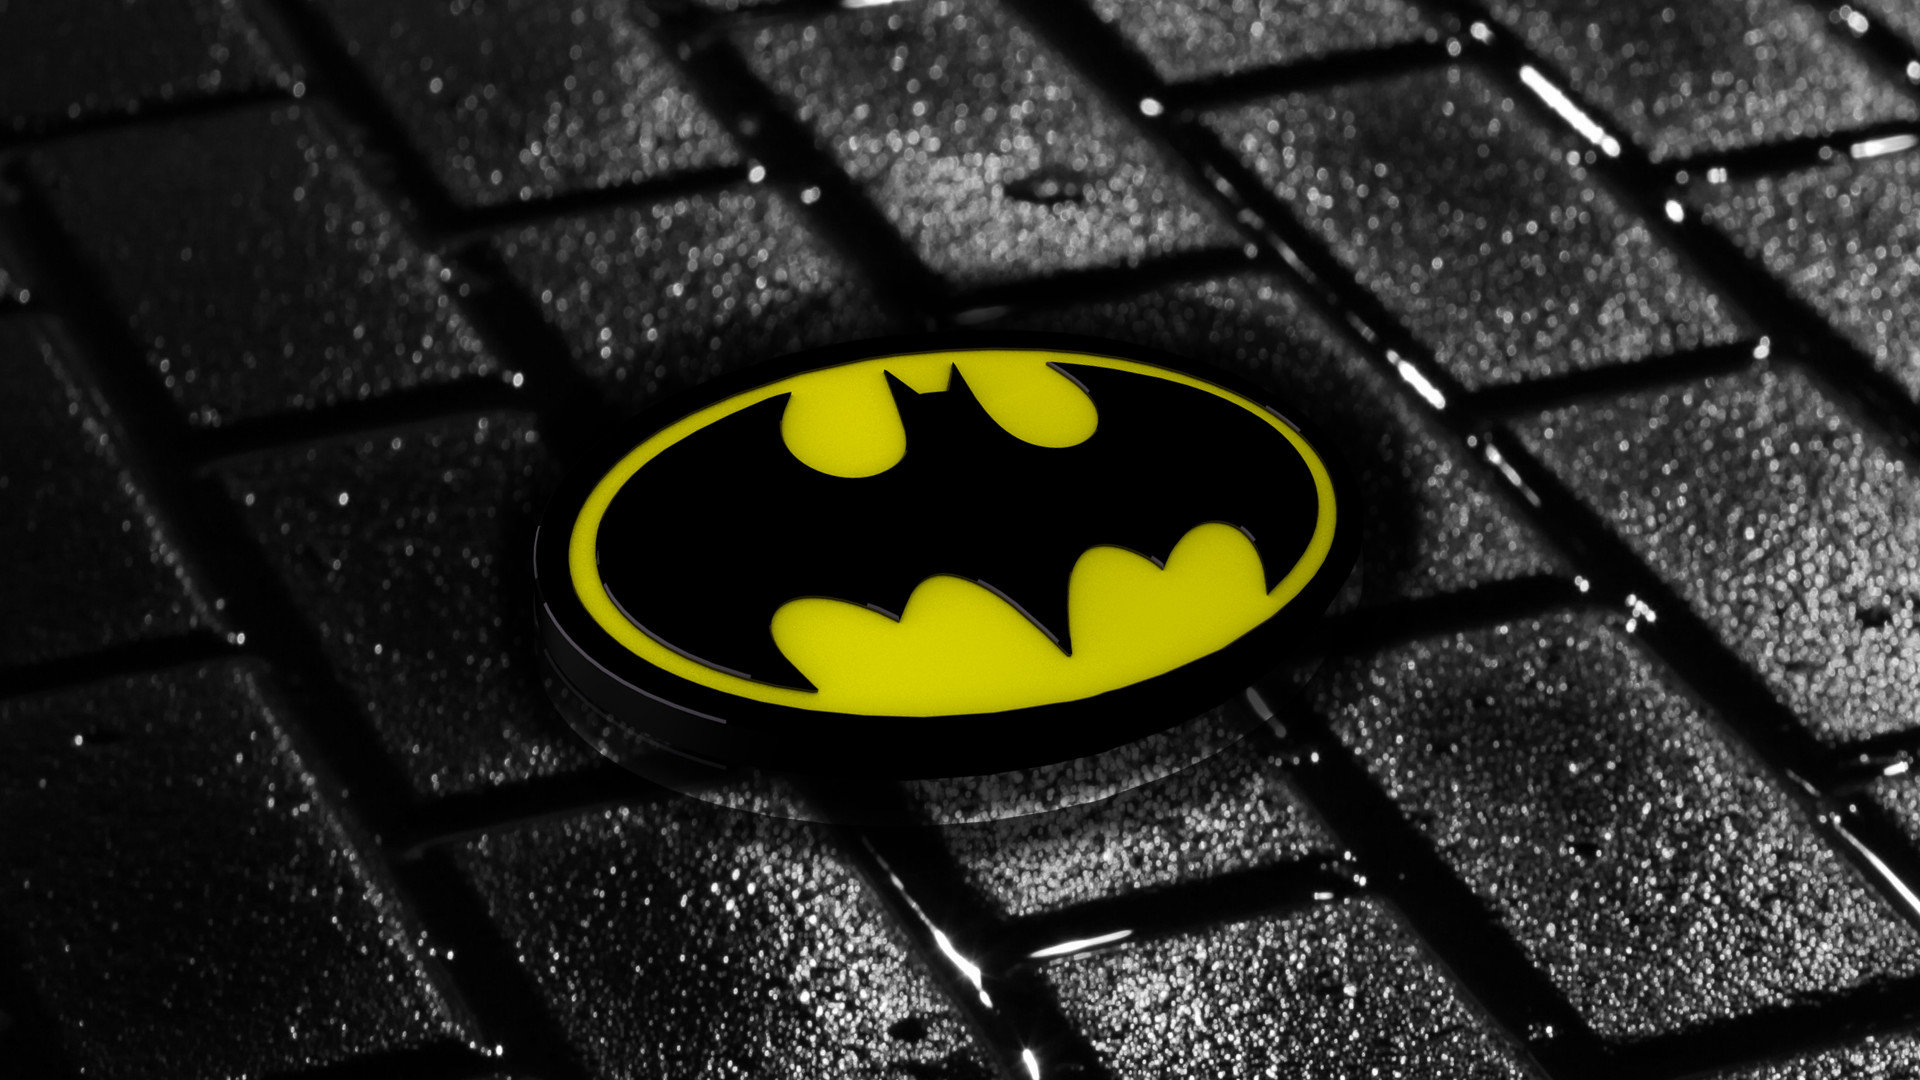 1920x1080 ... Batman 3D logo Wallpaper by RainbowZz-Design